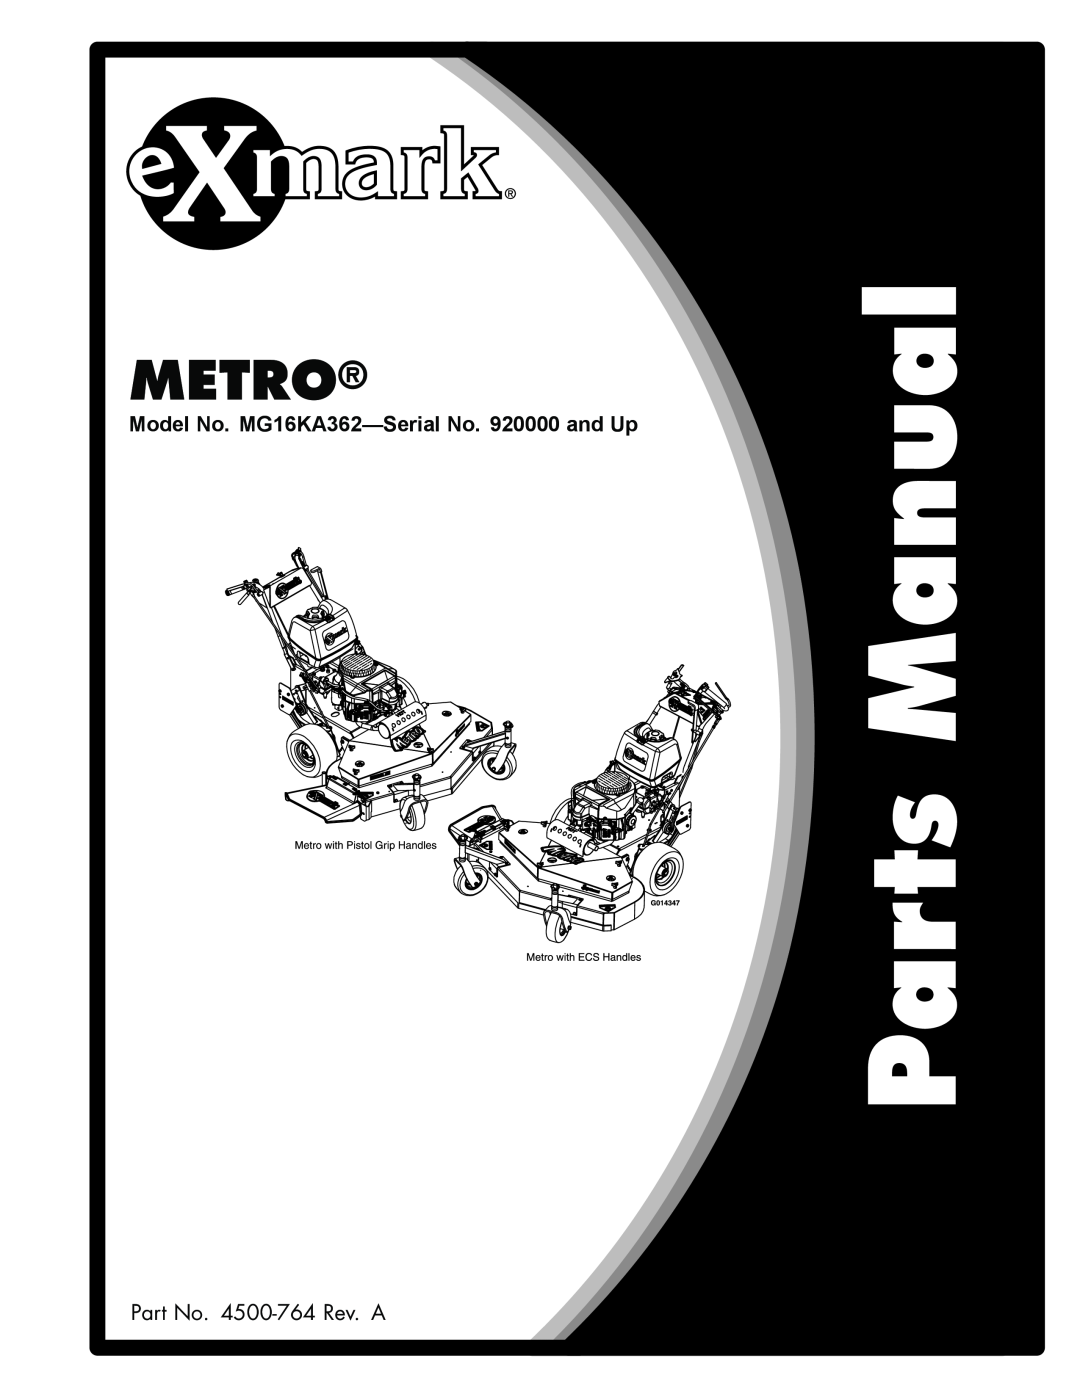 Exmark 4500-764 Rev.A manual Model No. MG16KA362-SerialNo. 920000 and Up, Metro 